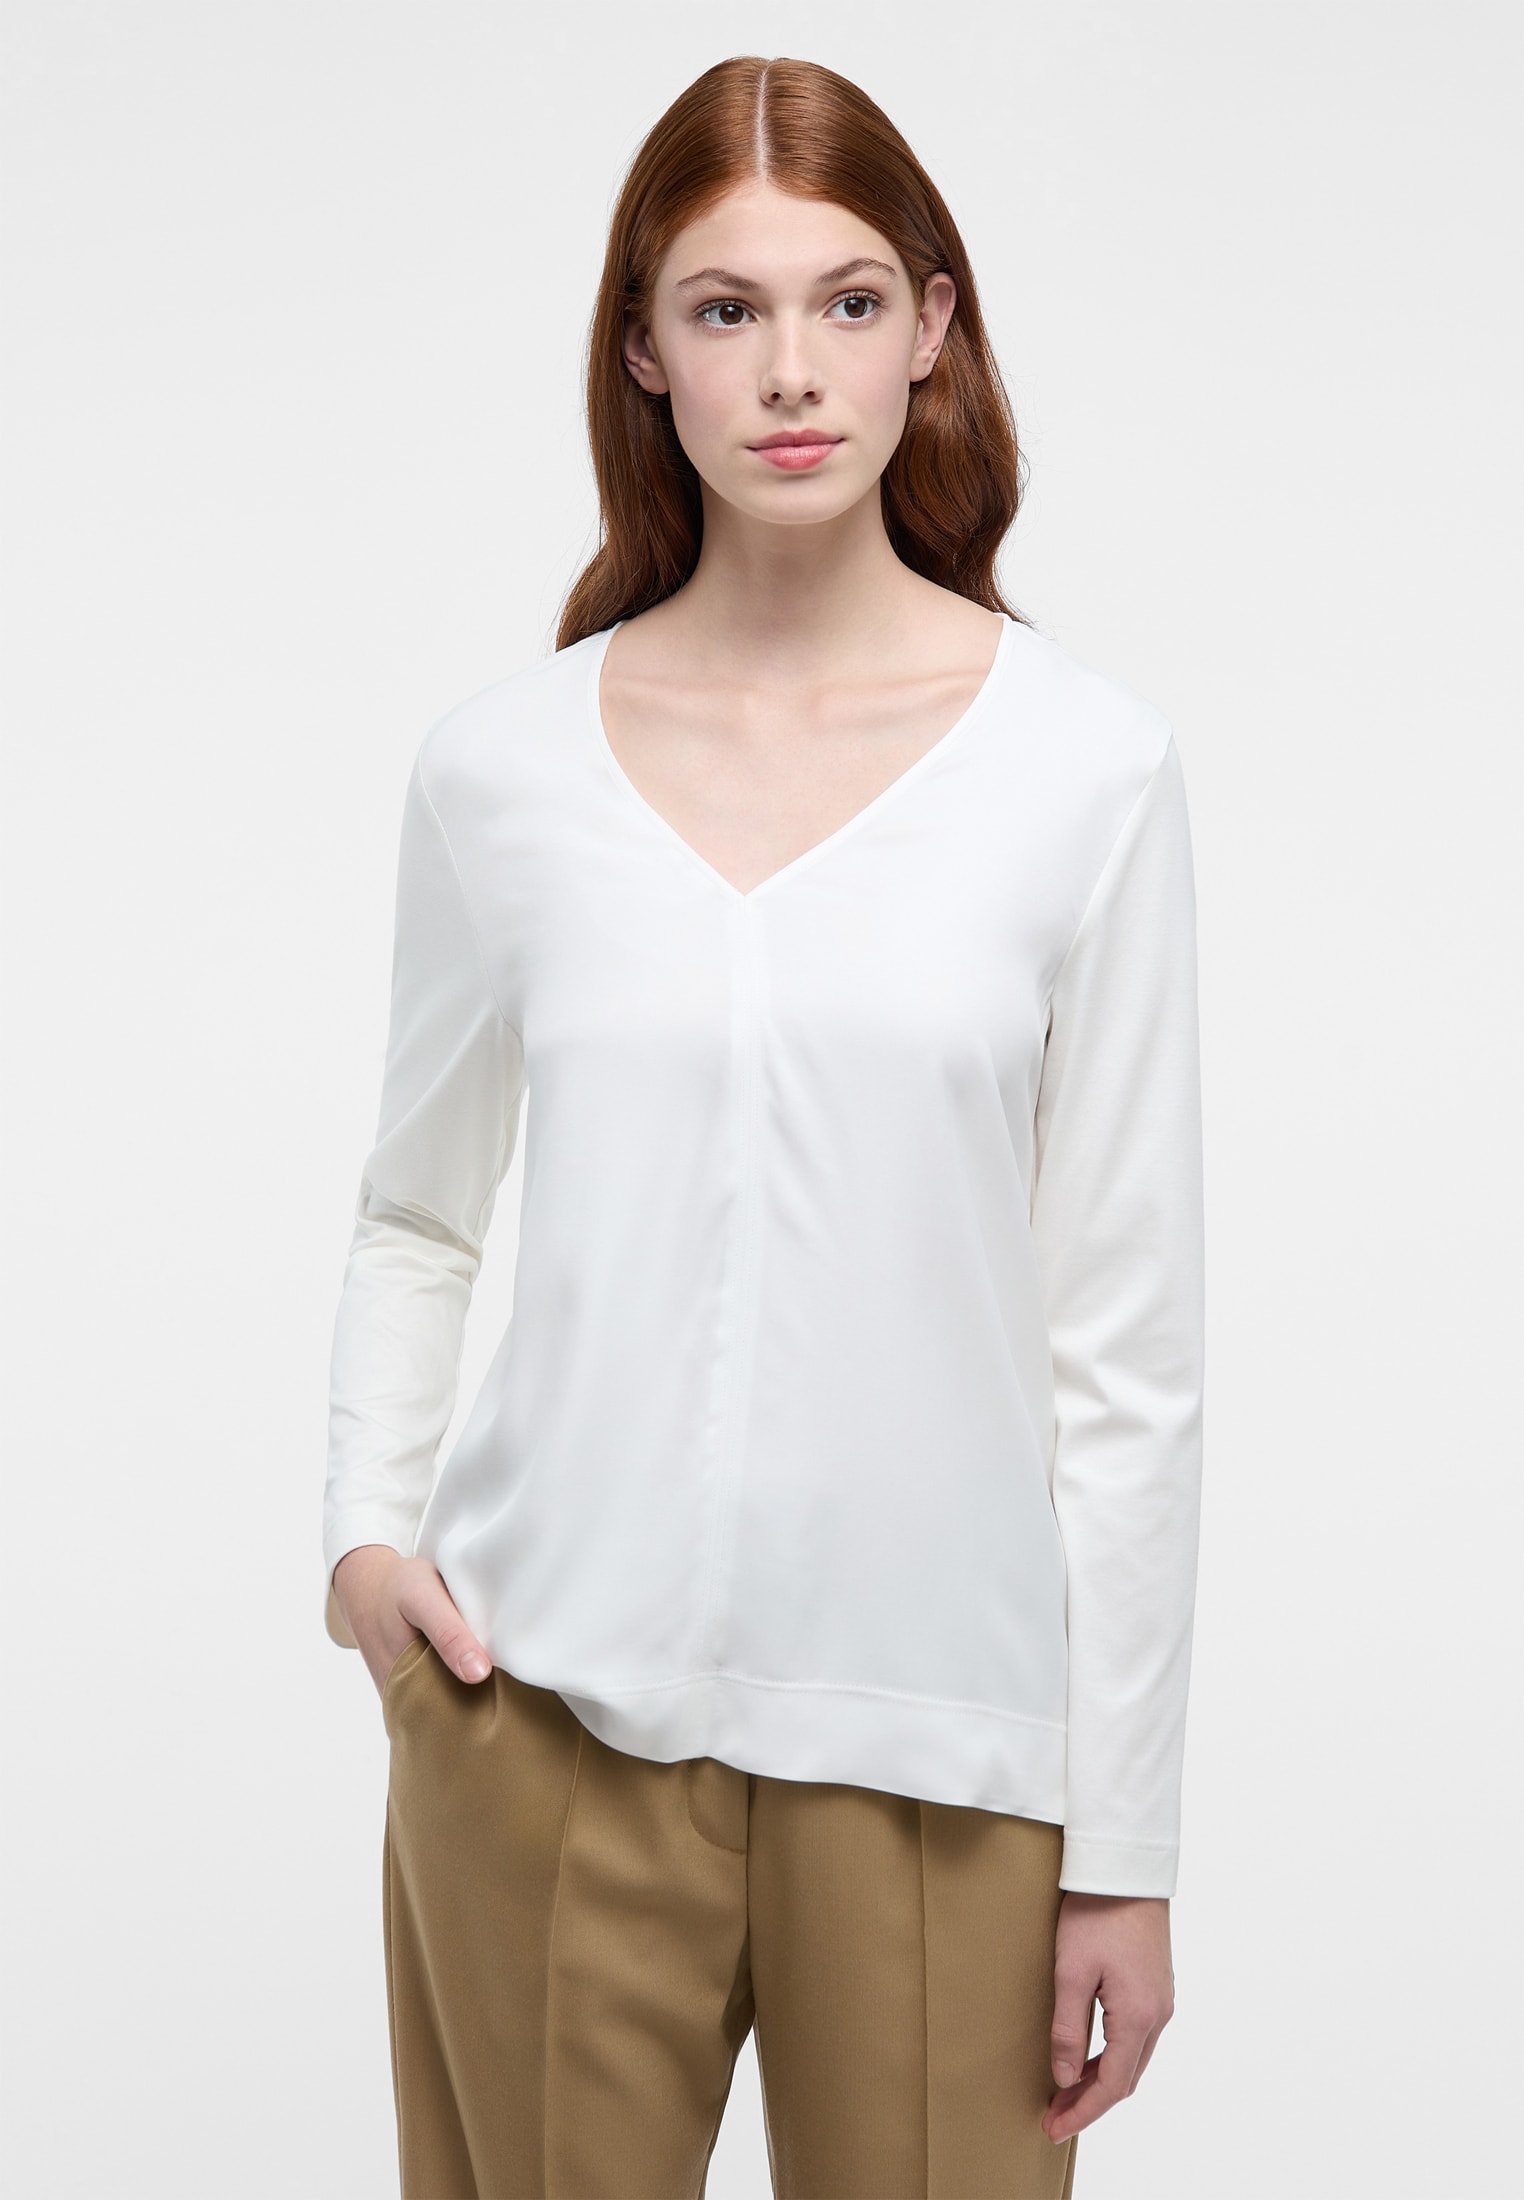 Viscose Shirt Bluse | | off-white Langarm in | 46 off-white 2BL04252-00-02-46-1/1 | unifarben